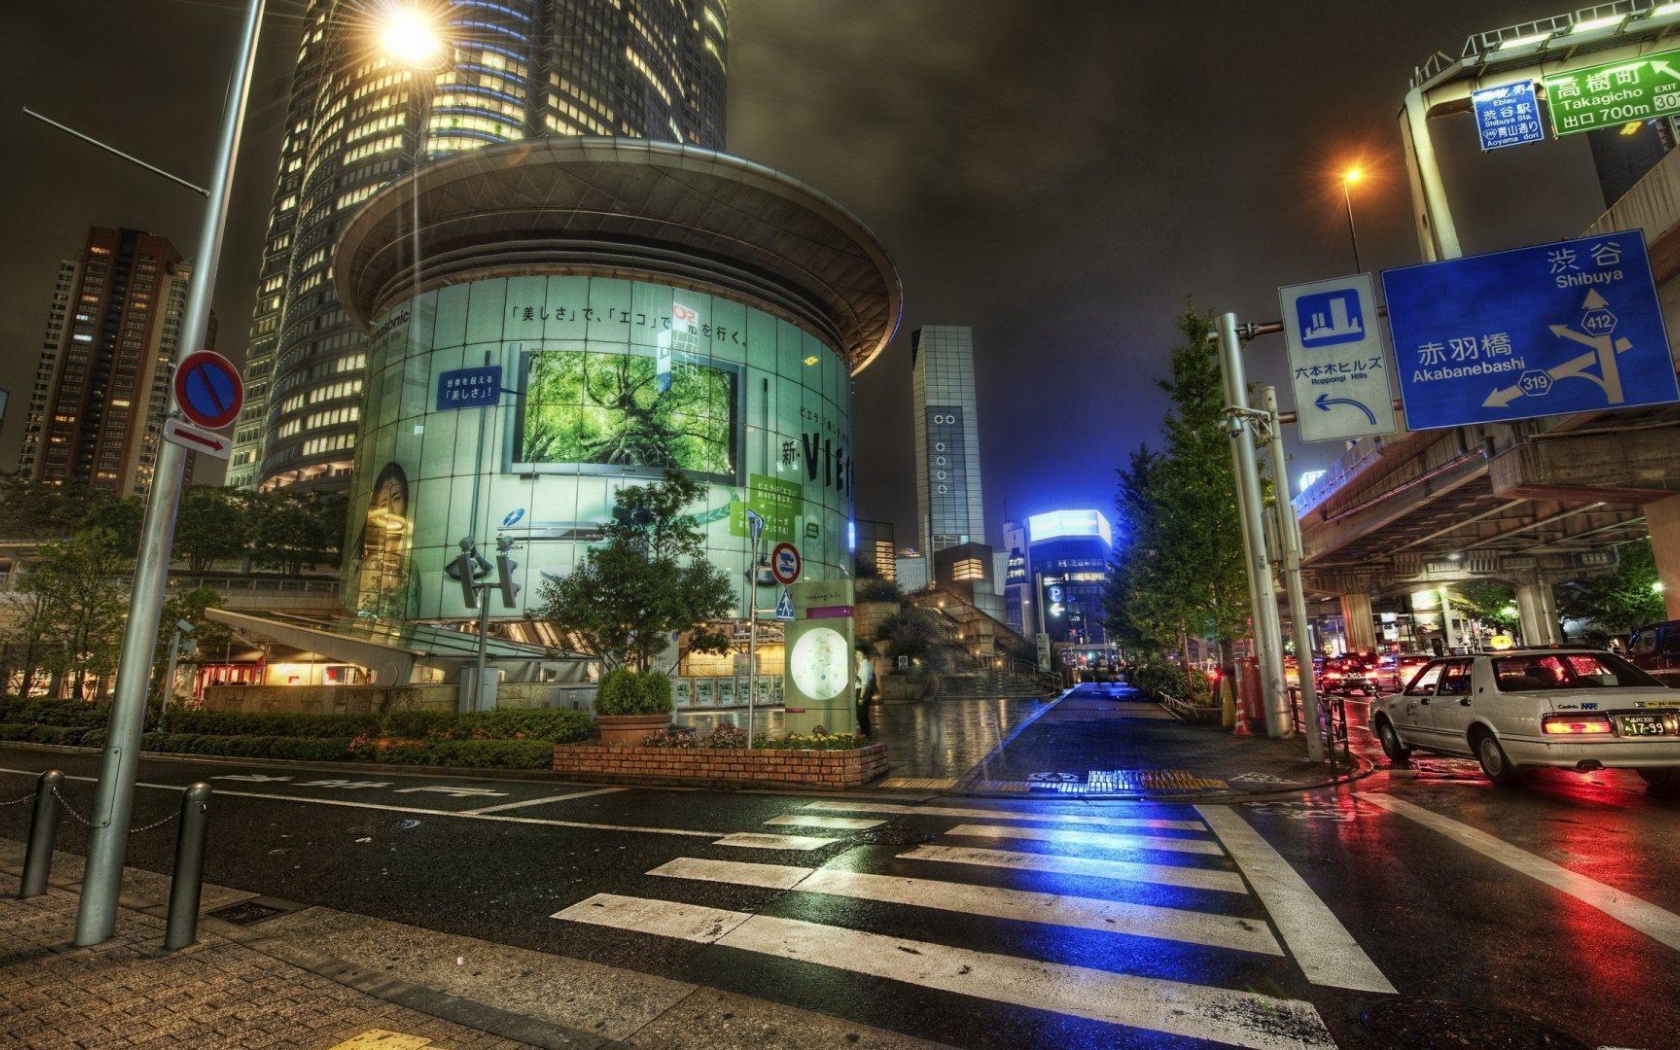 Street in Tokyo